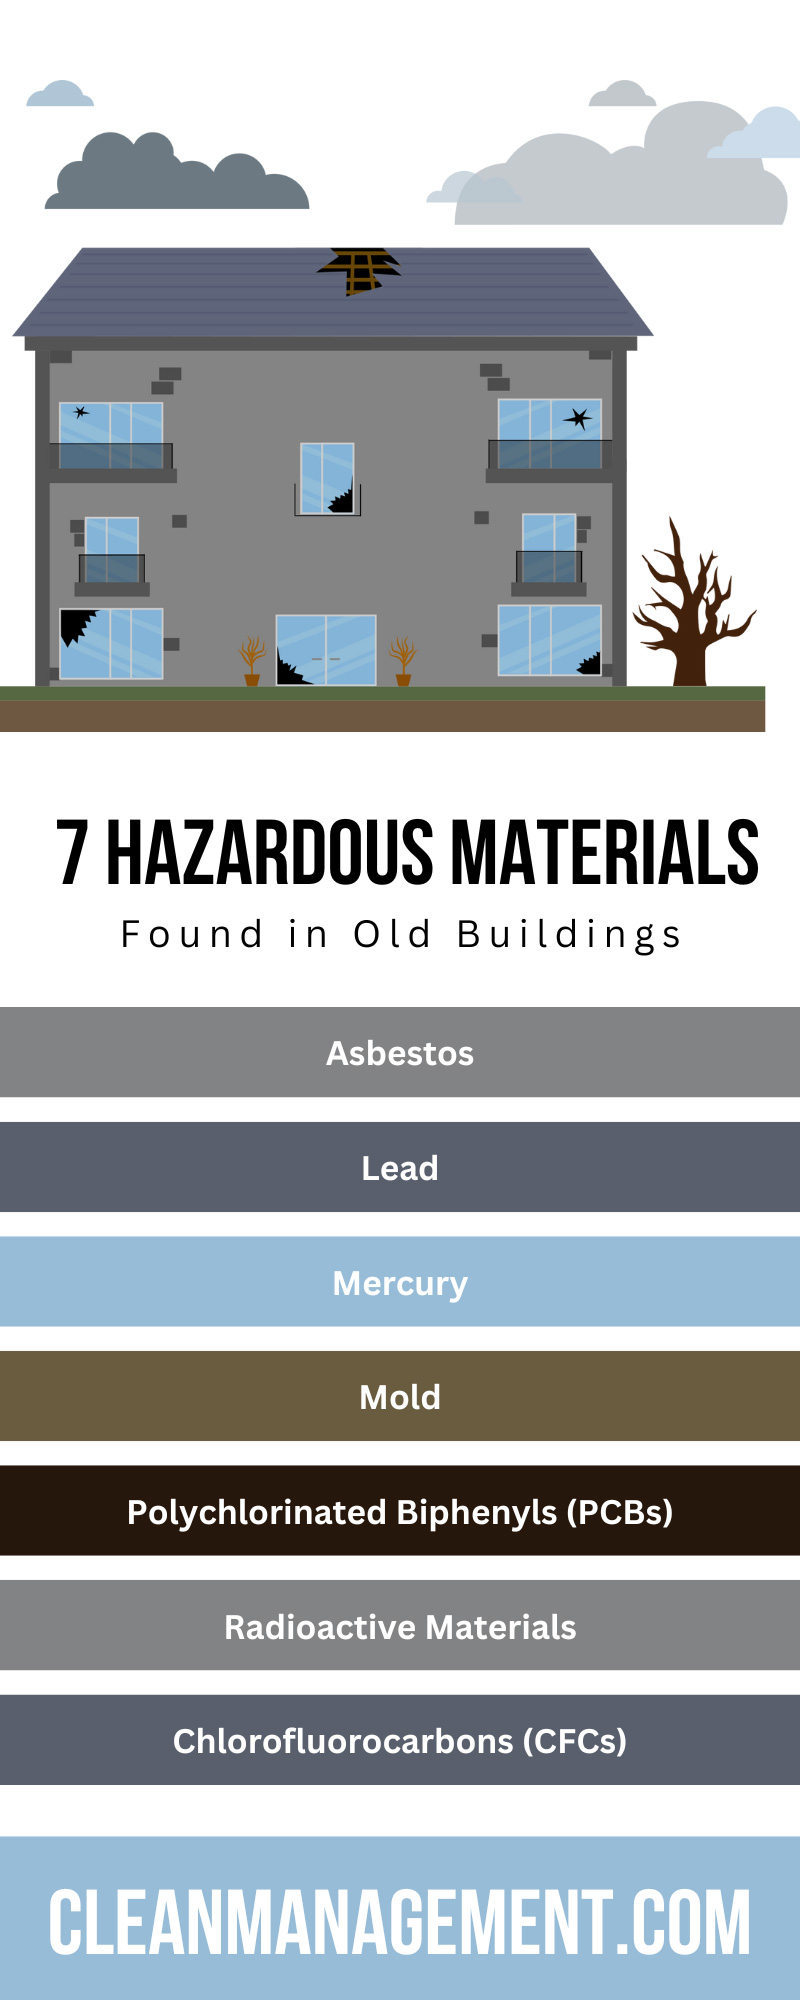 7 Hazardous Materials Found in Old Buildings